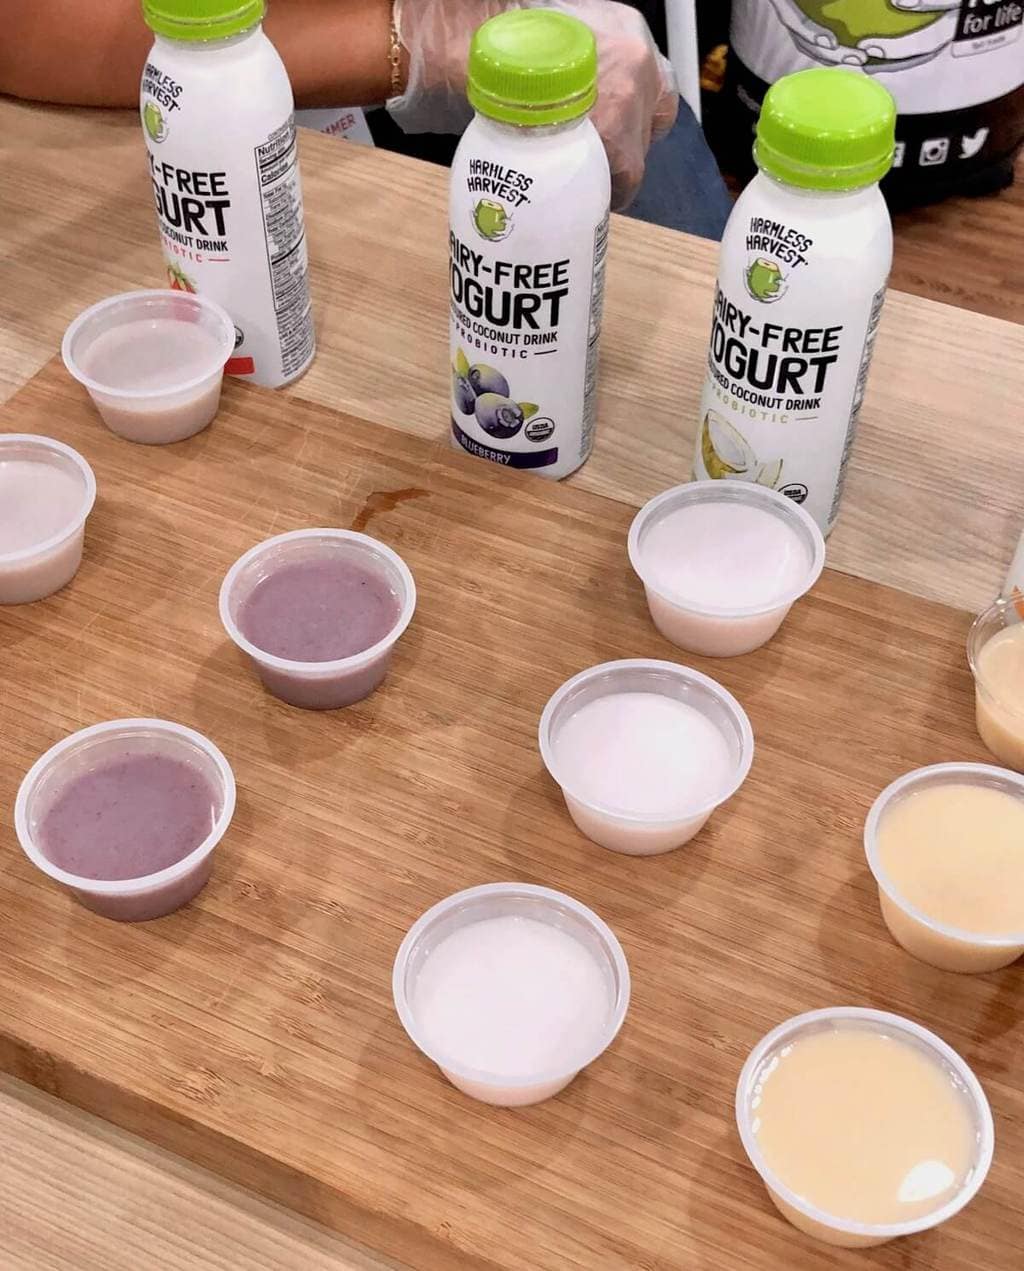 coconut yogurt samples